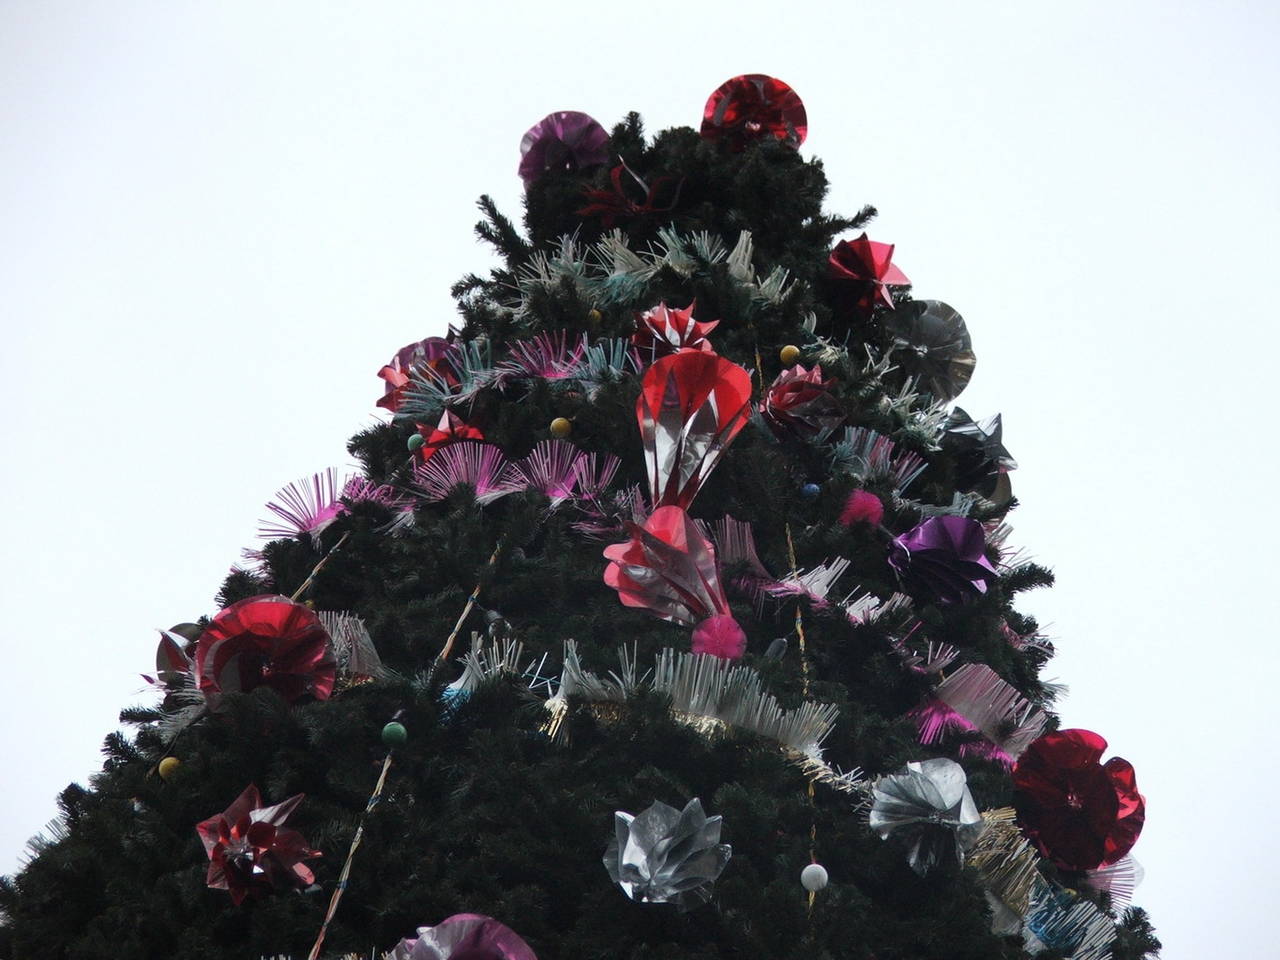 Новогодняя елка на площади